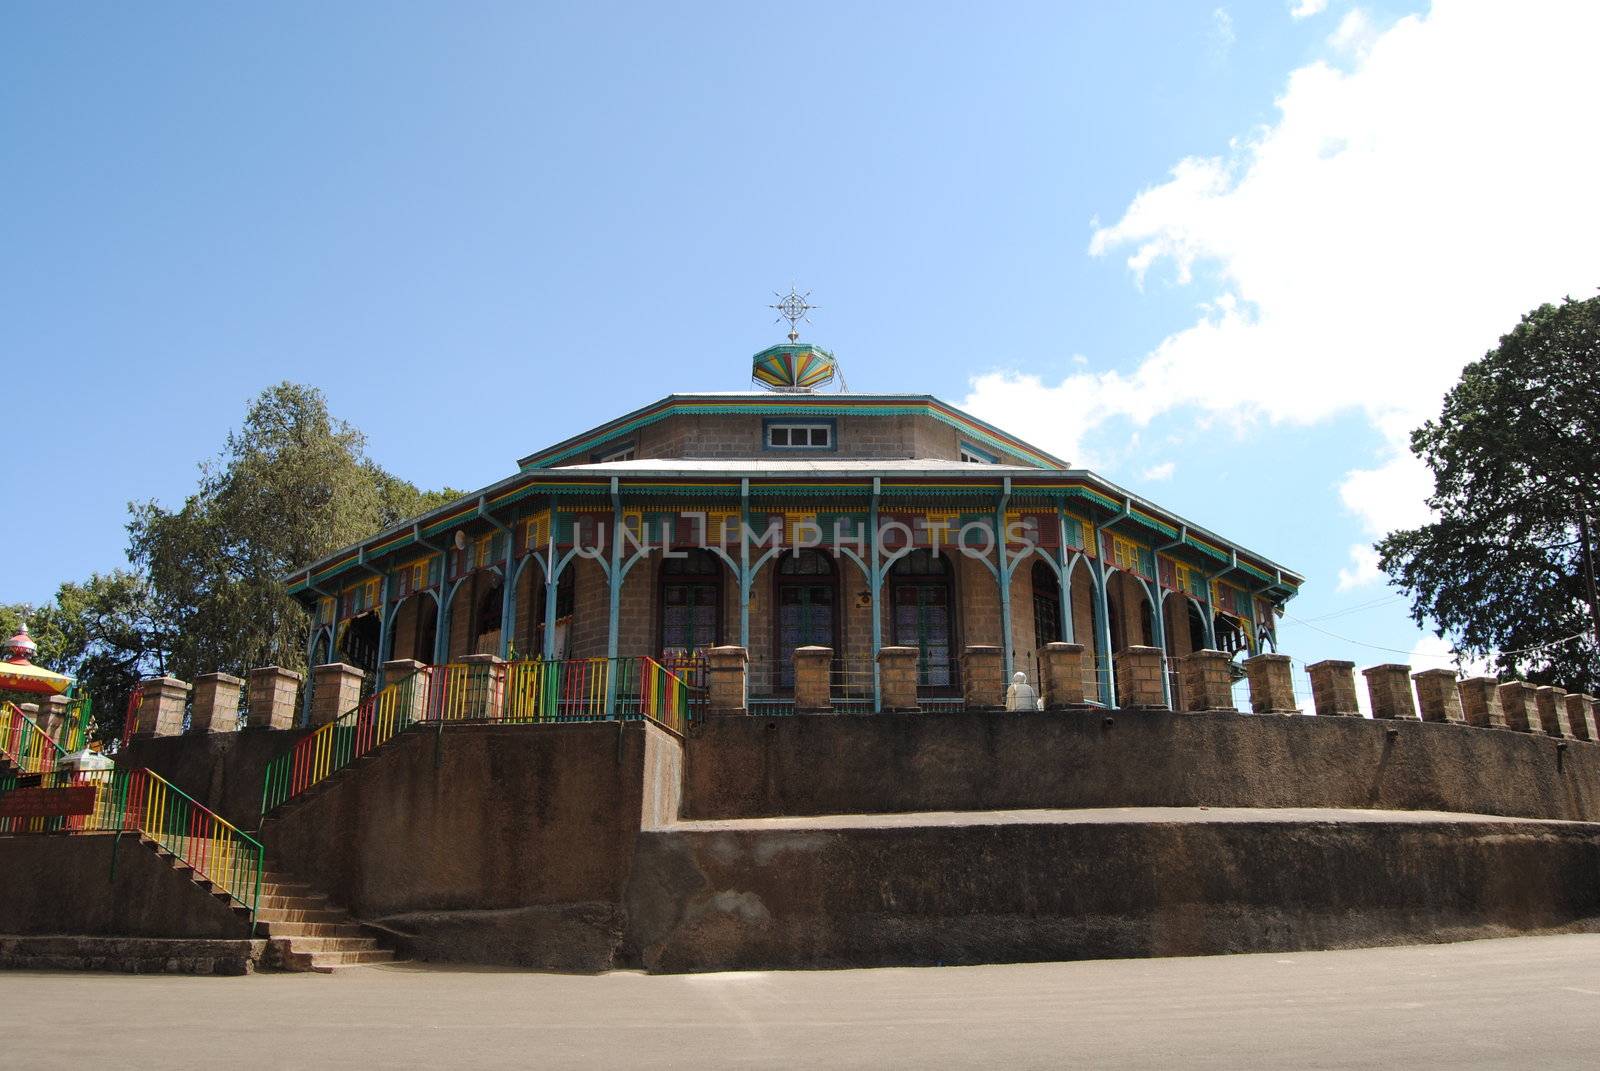 church in Ethiopia by viviolsen